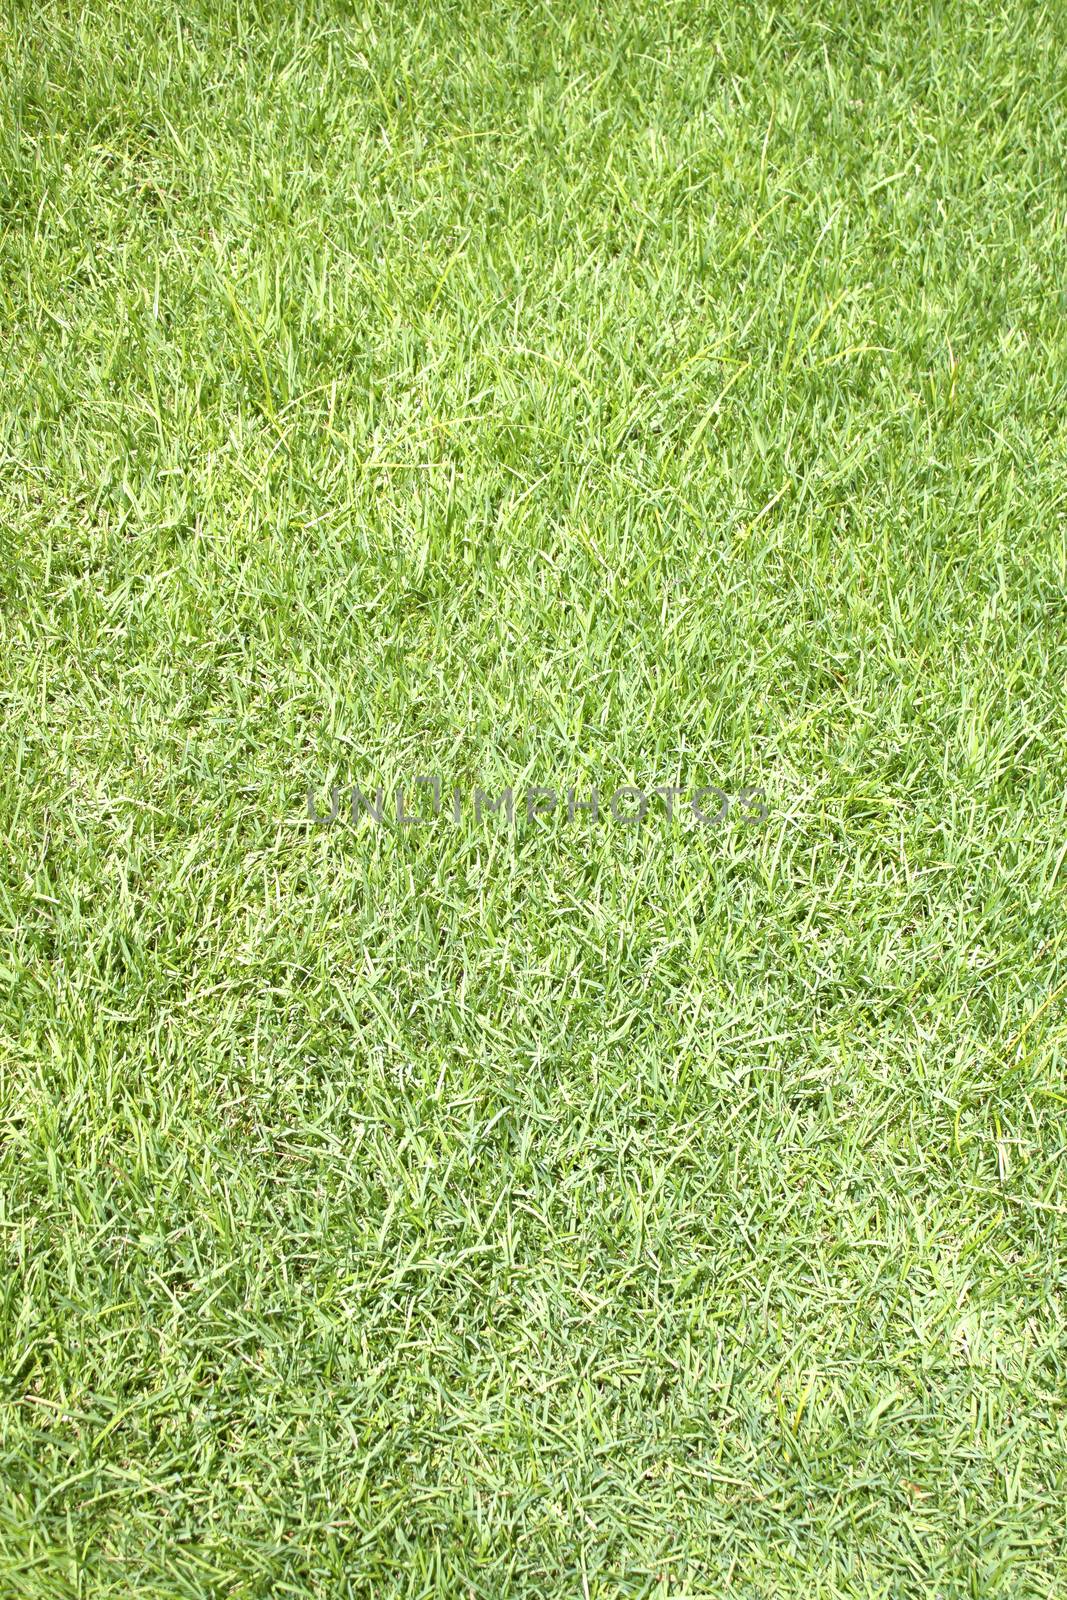 grass by janniwet